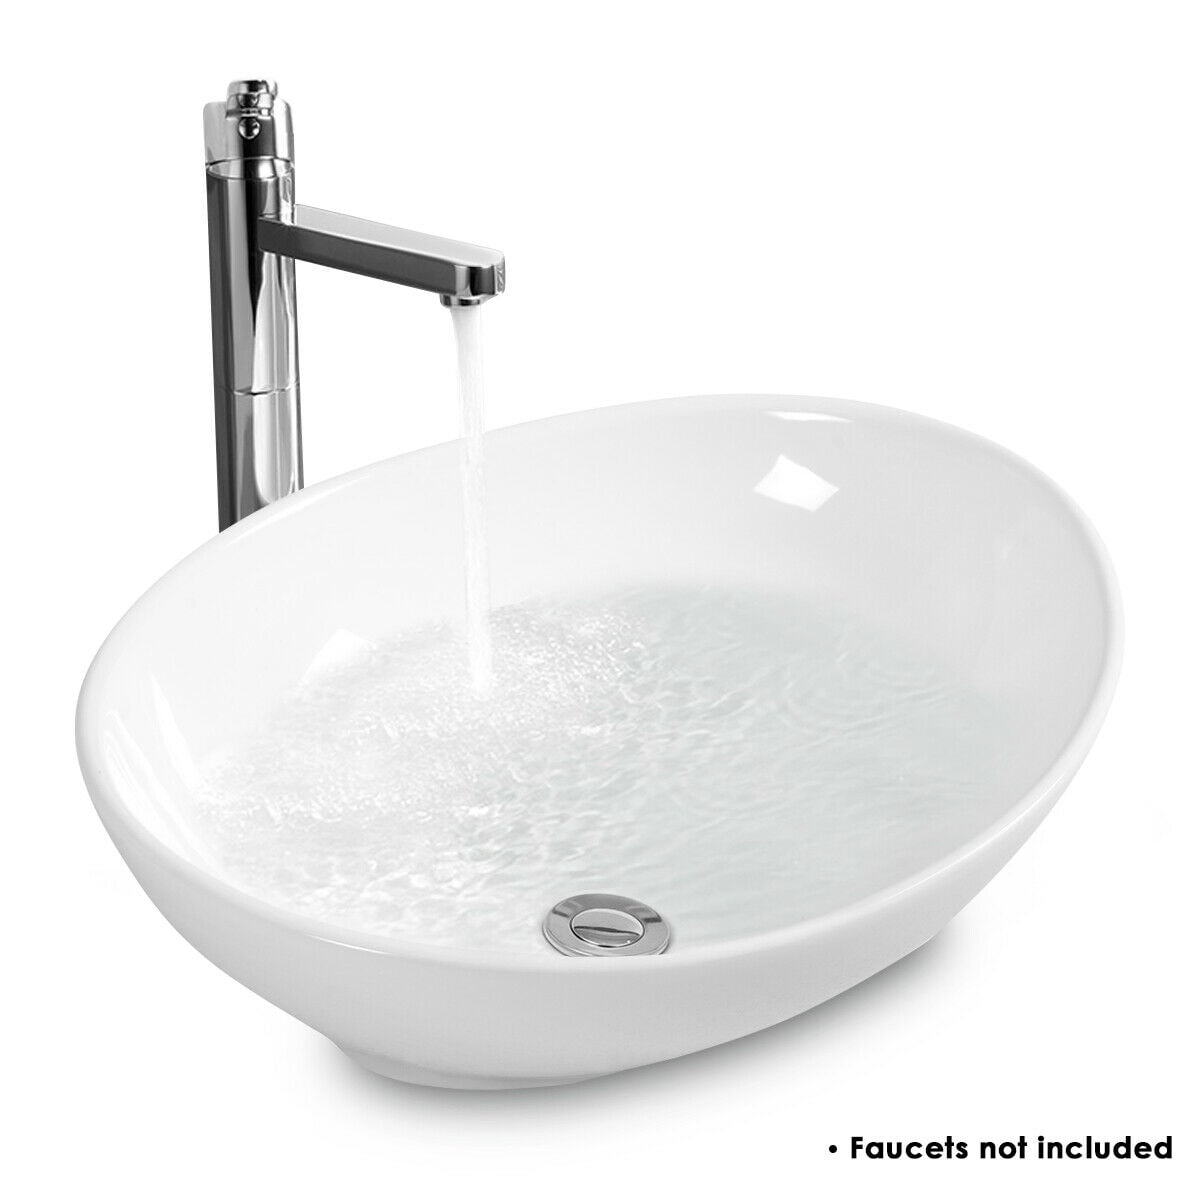 Goplus White Ceramic Vessel Oval Modern Bathroom Sink Drain Included (16-in x 13-in)